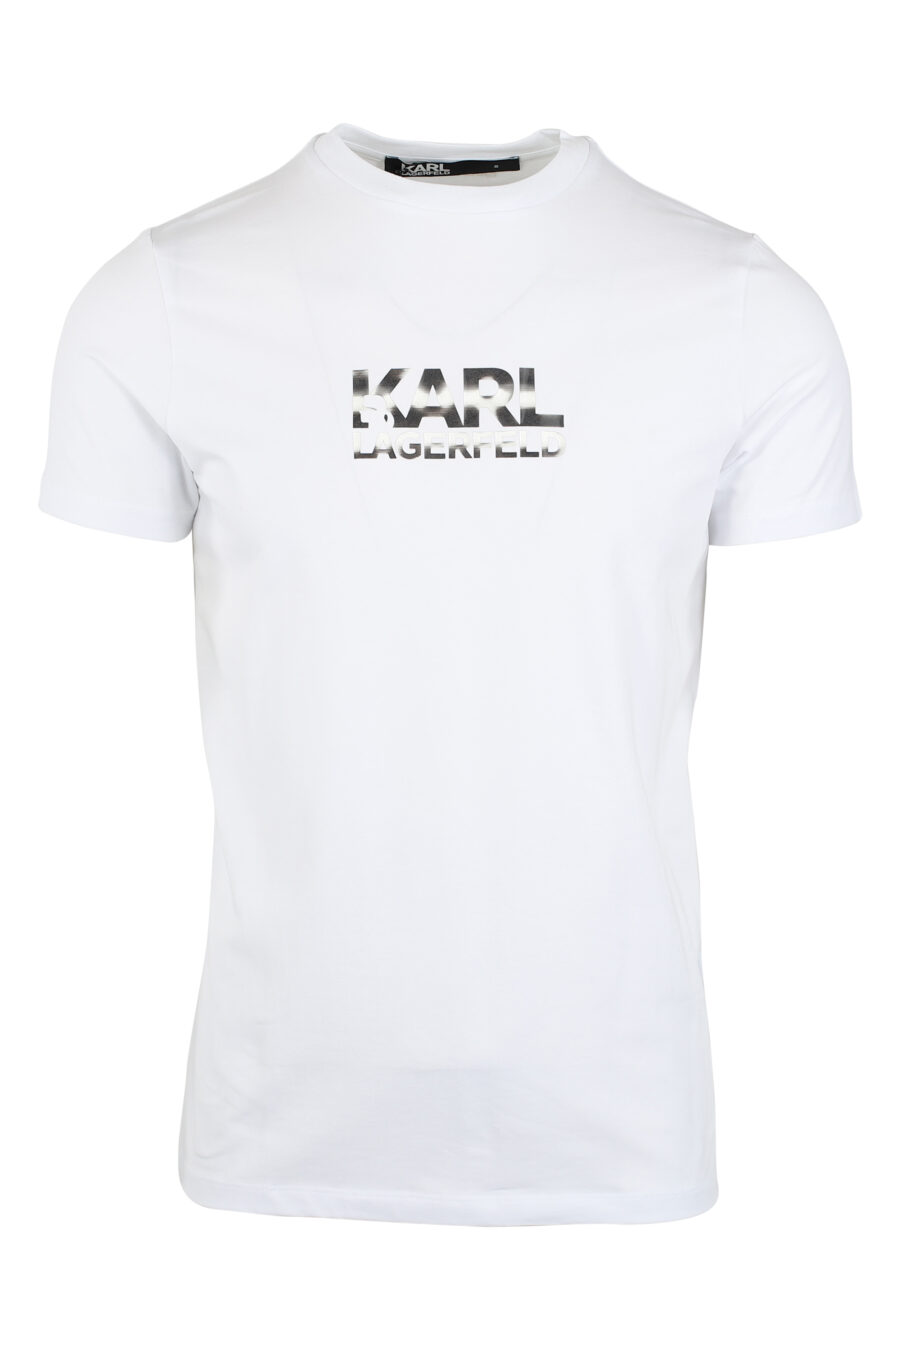 White T-shirt with hologram effect logo - IMG 9485